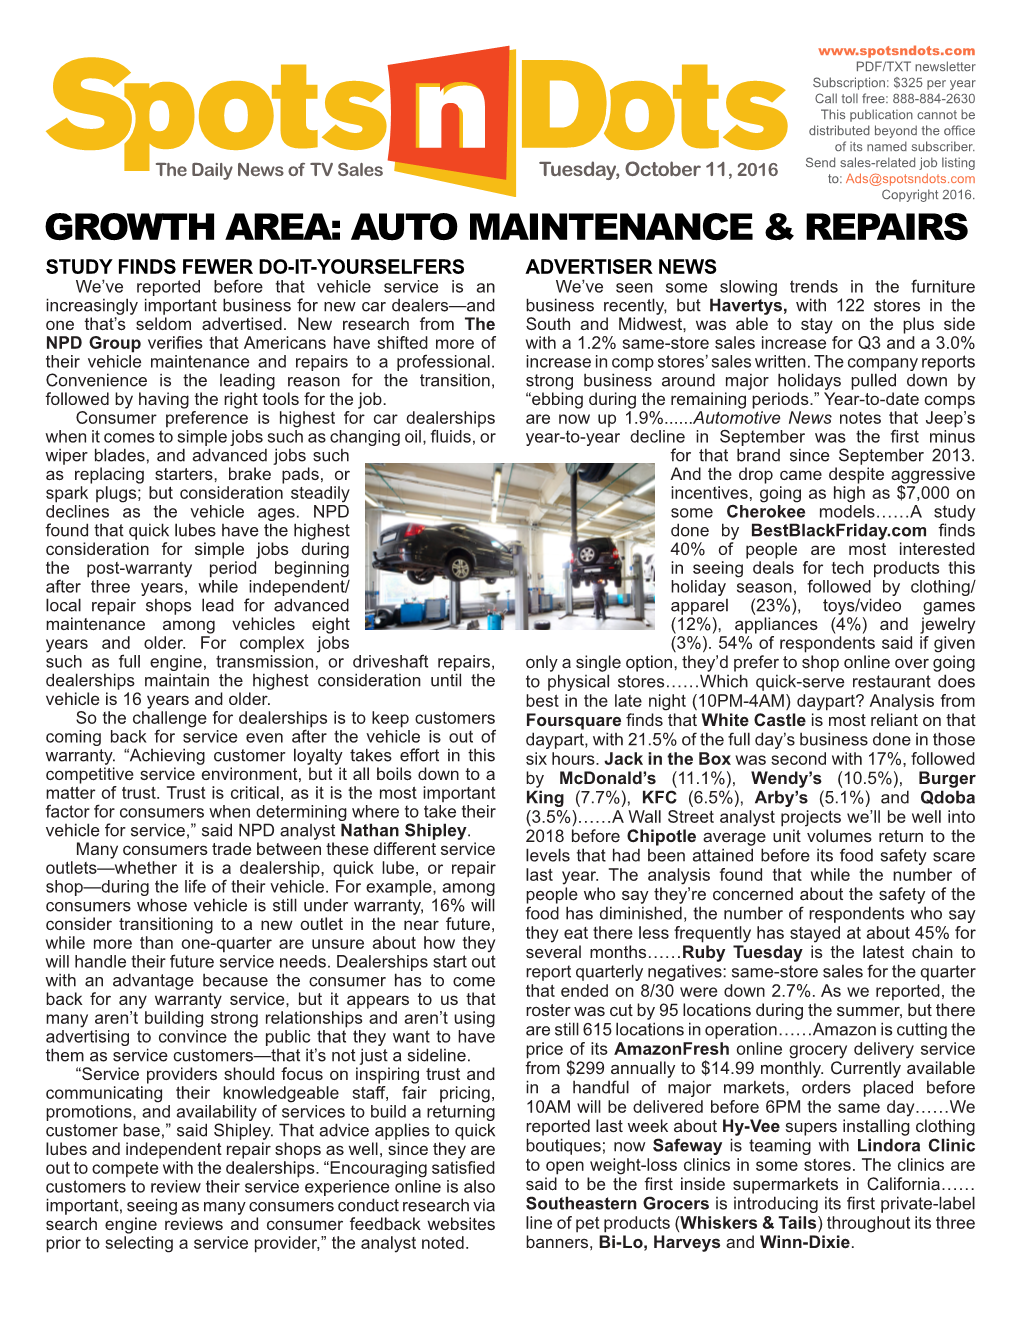 Growth Area: Auto Maintenance & Repairs